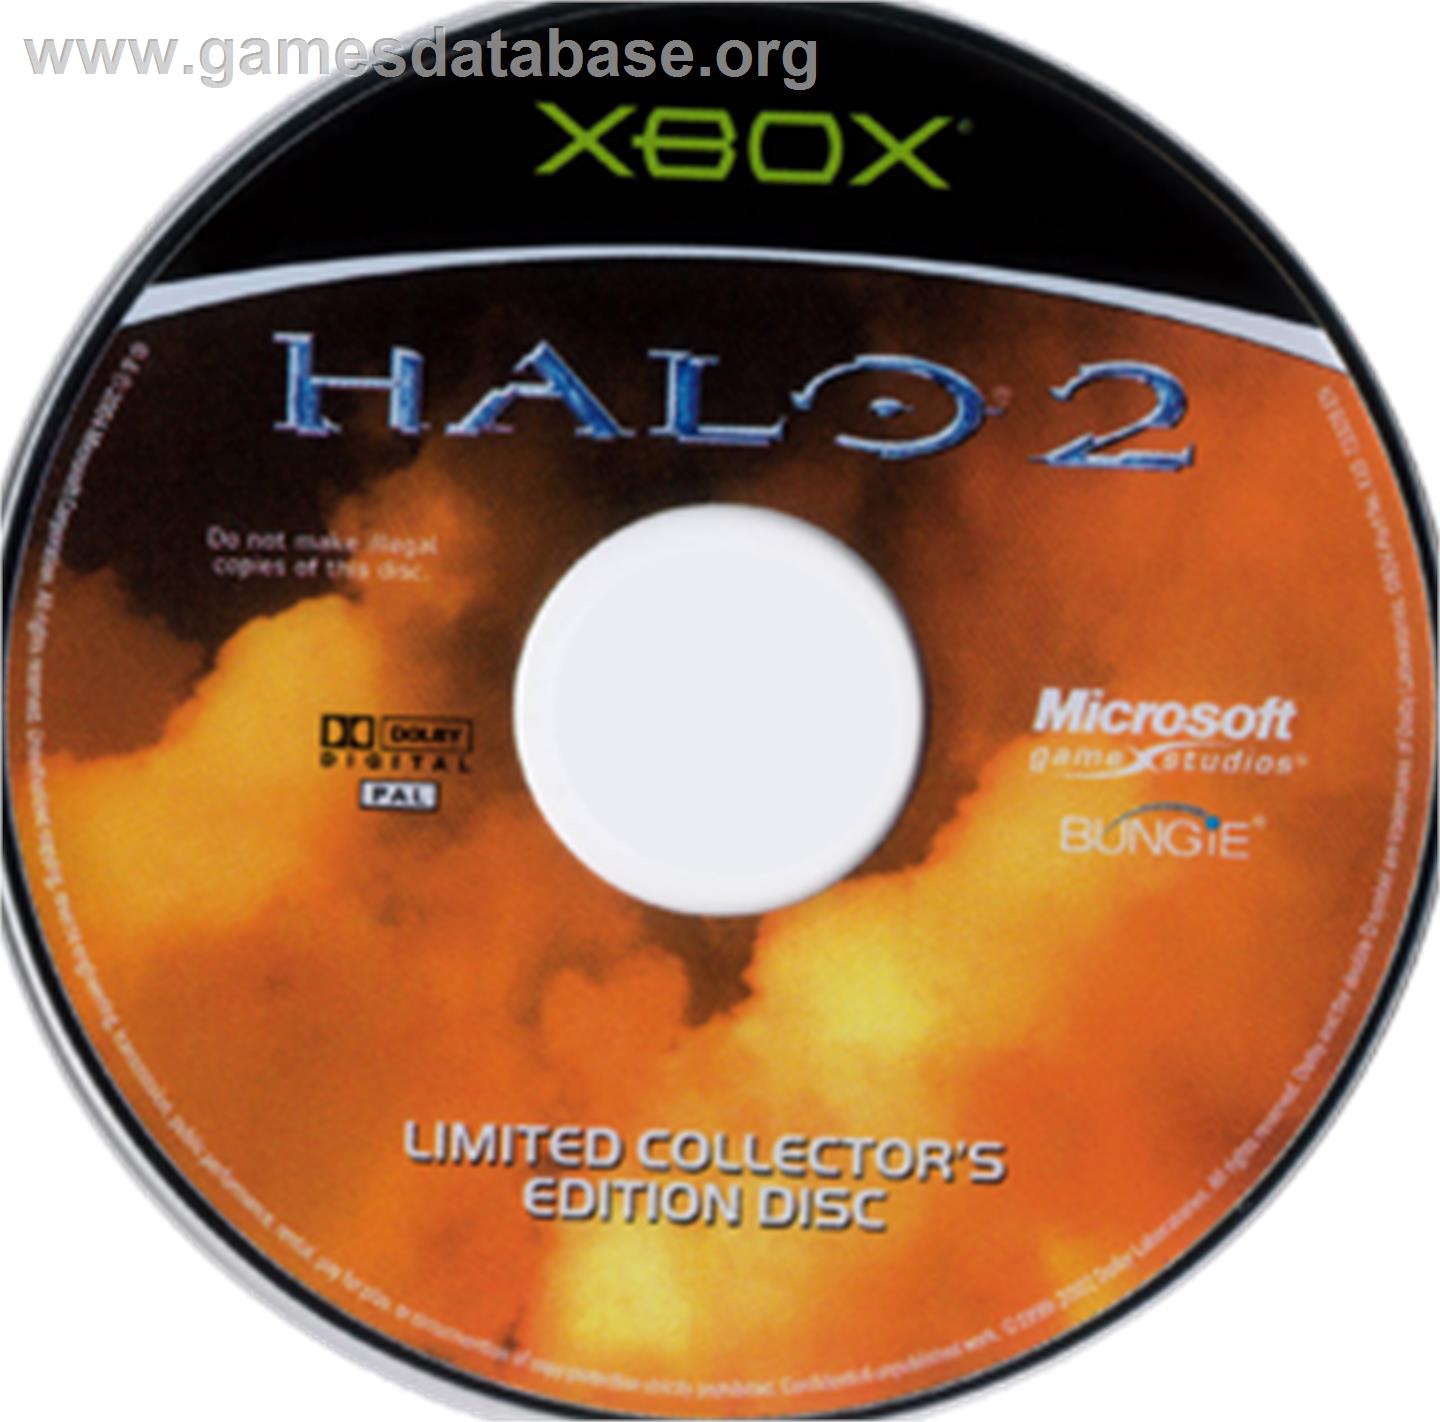 Halo 2 (Limited Collector's Edition) - Microsoft Xbox - Artwork - CD